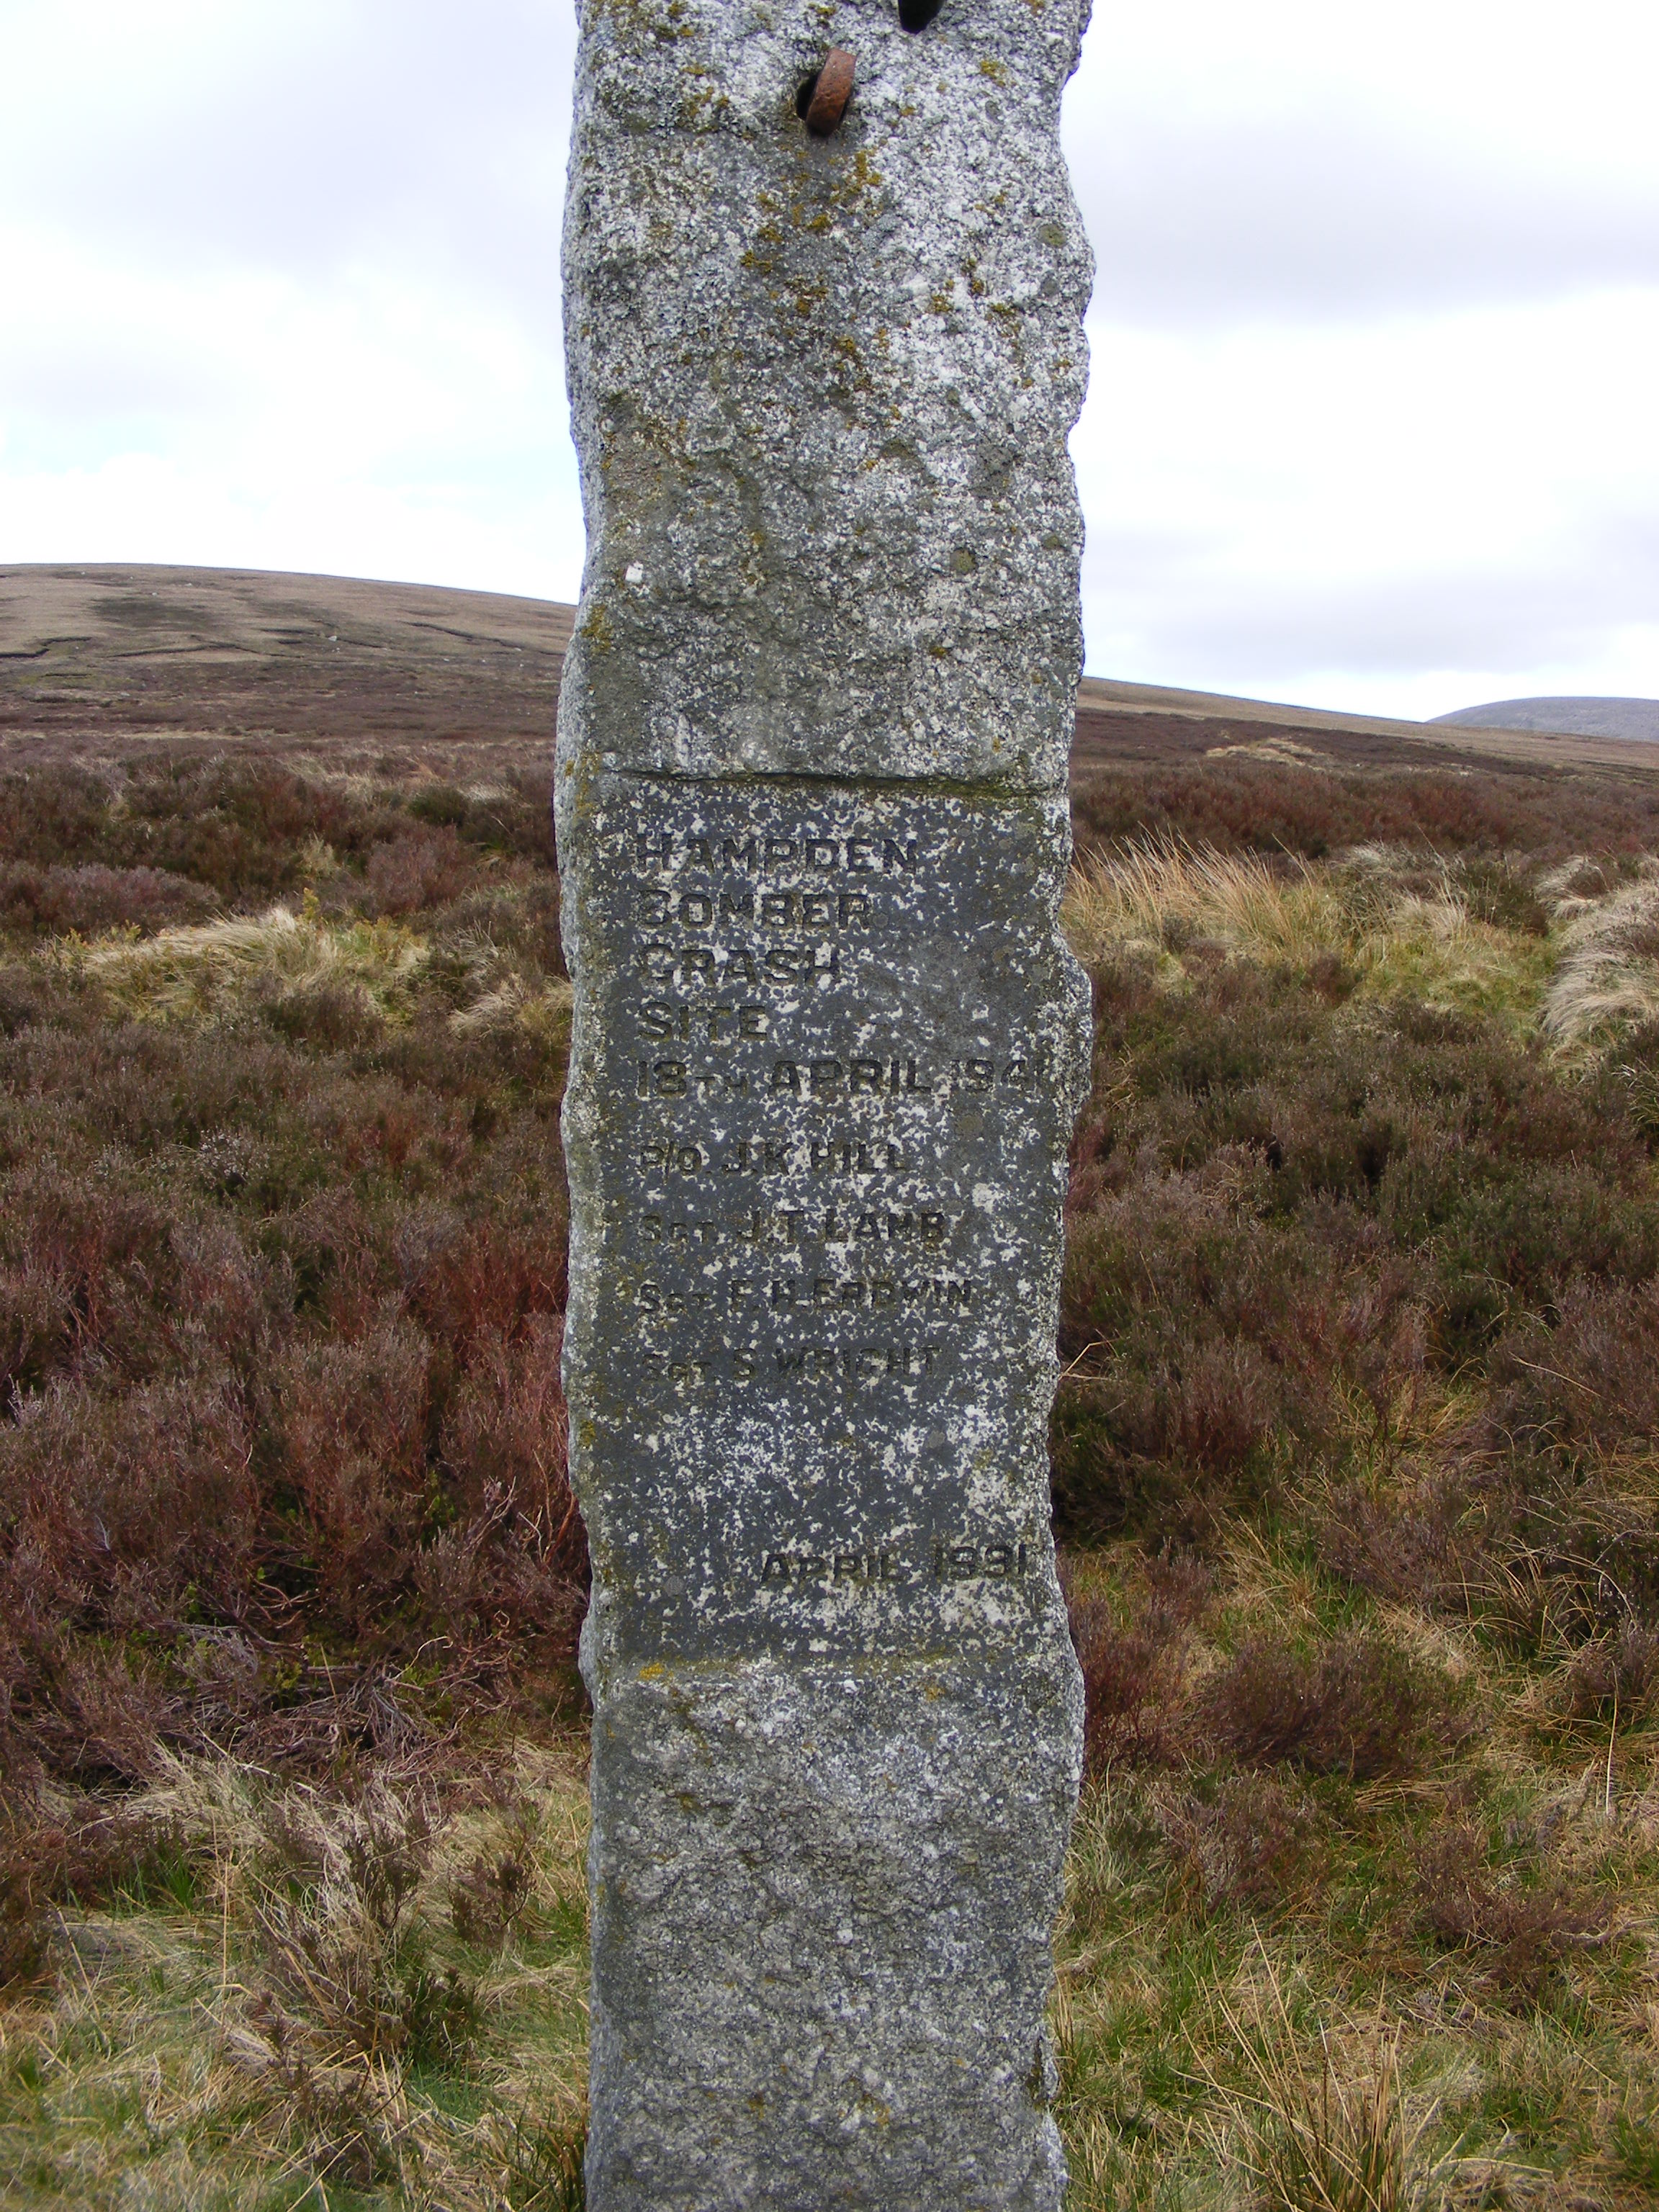 The stone inscription